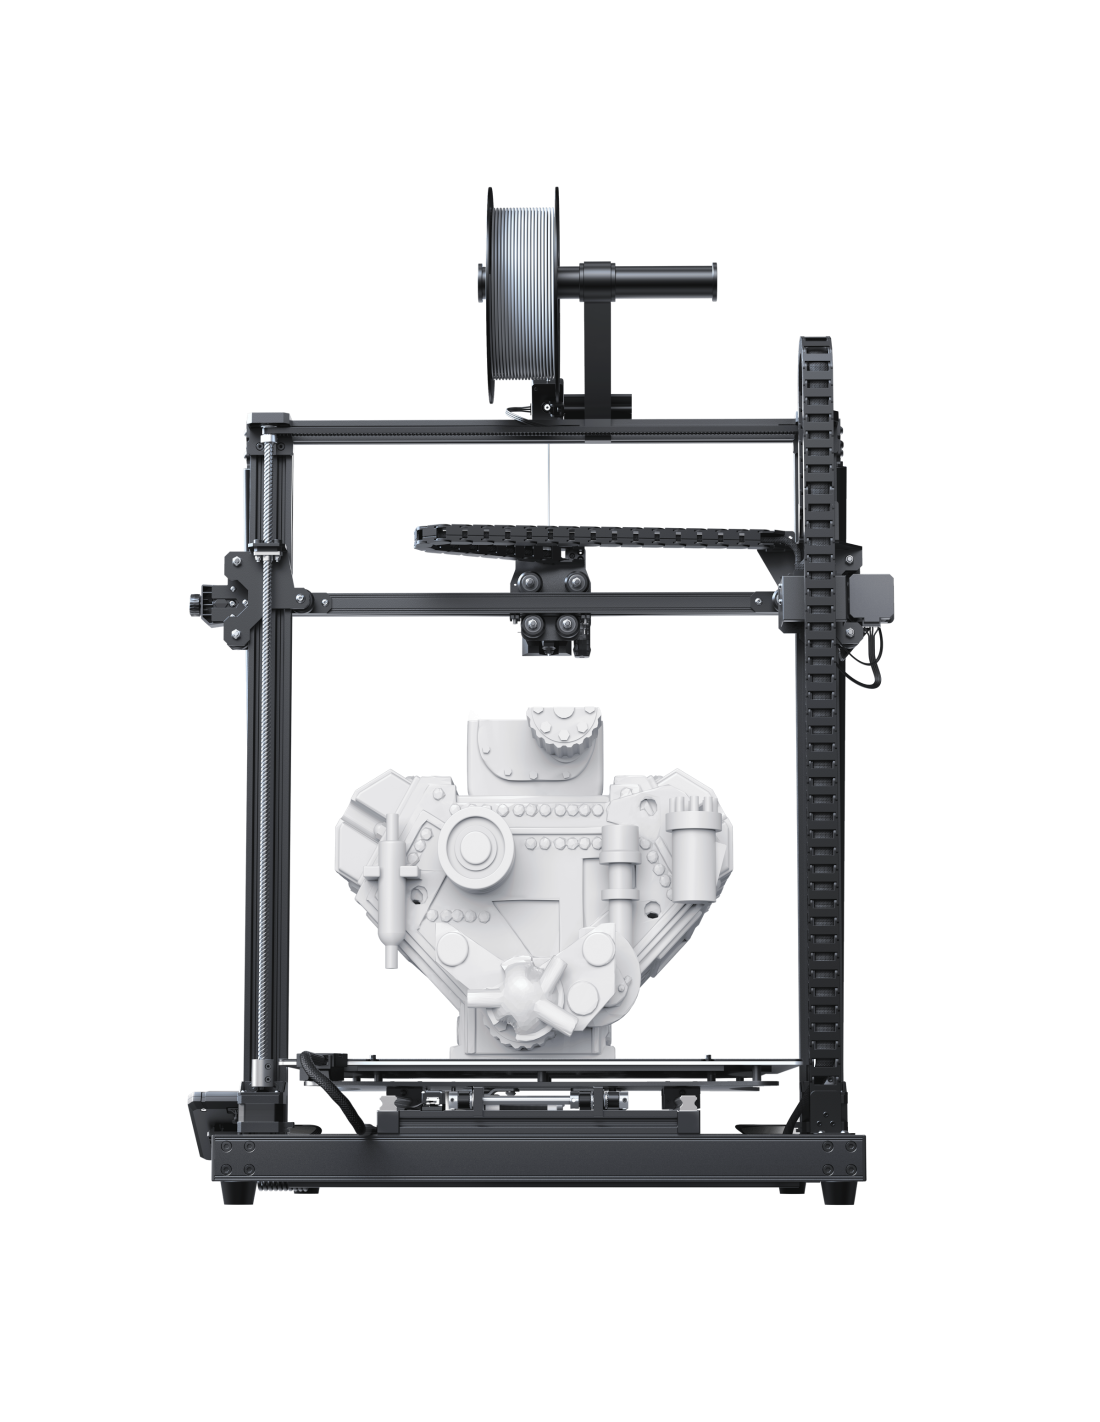 Creality CR-M4 impresora 3D